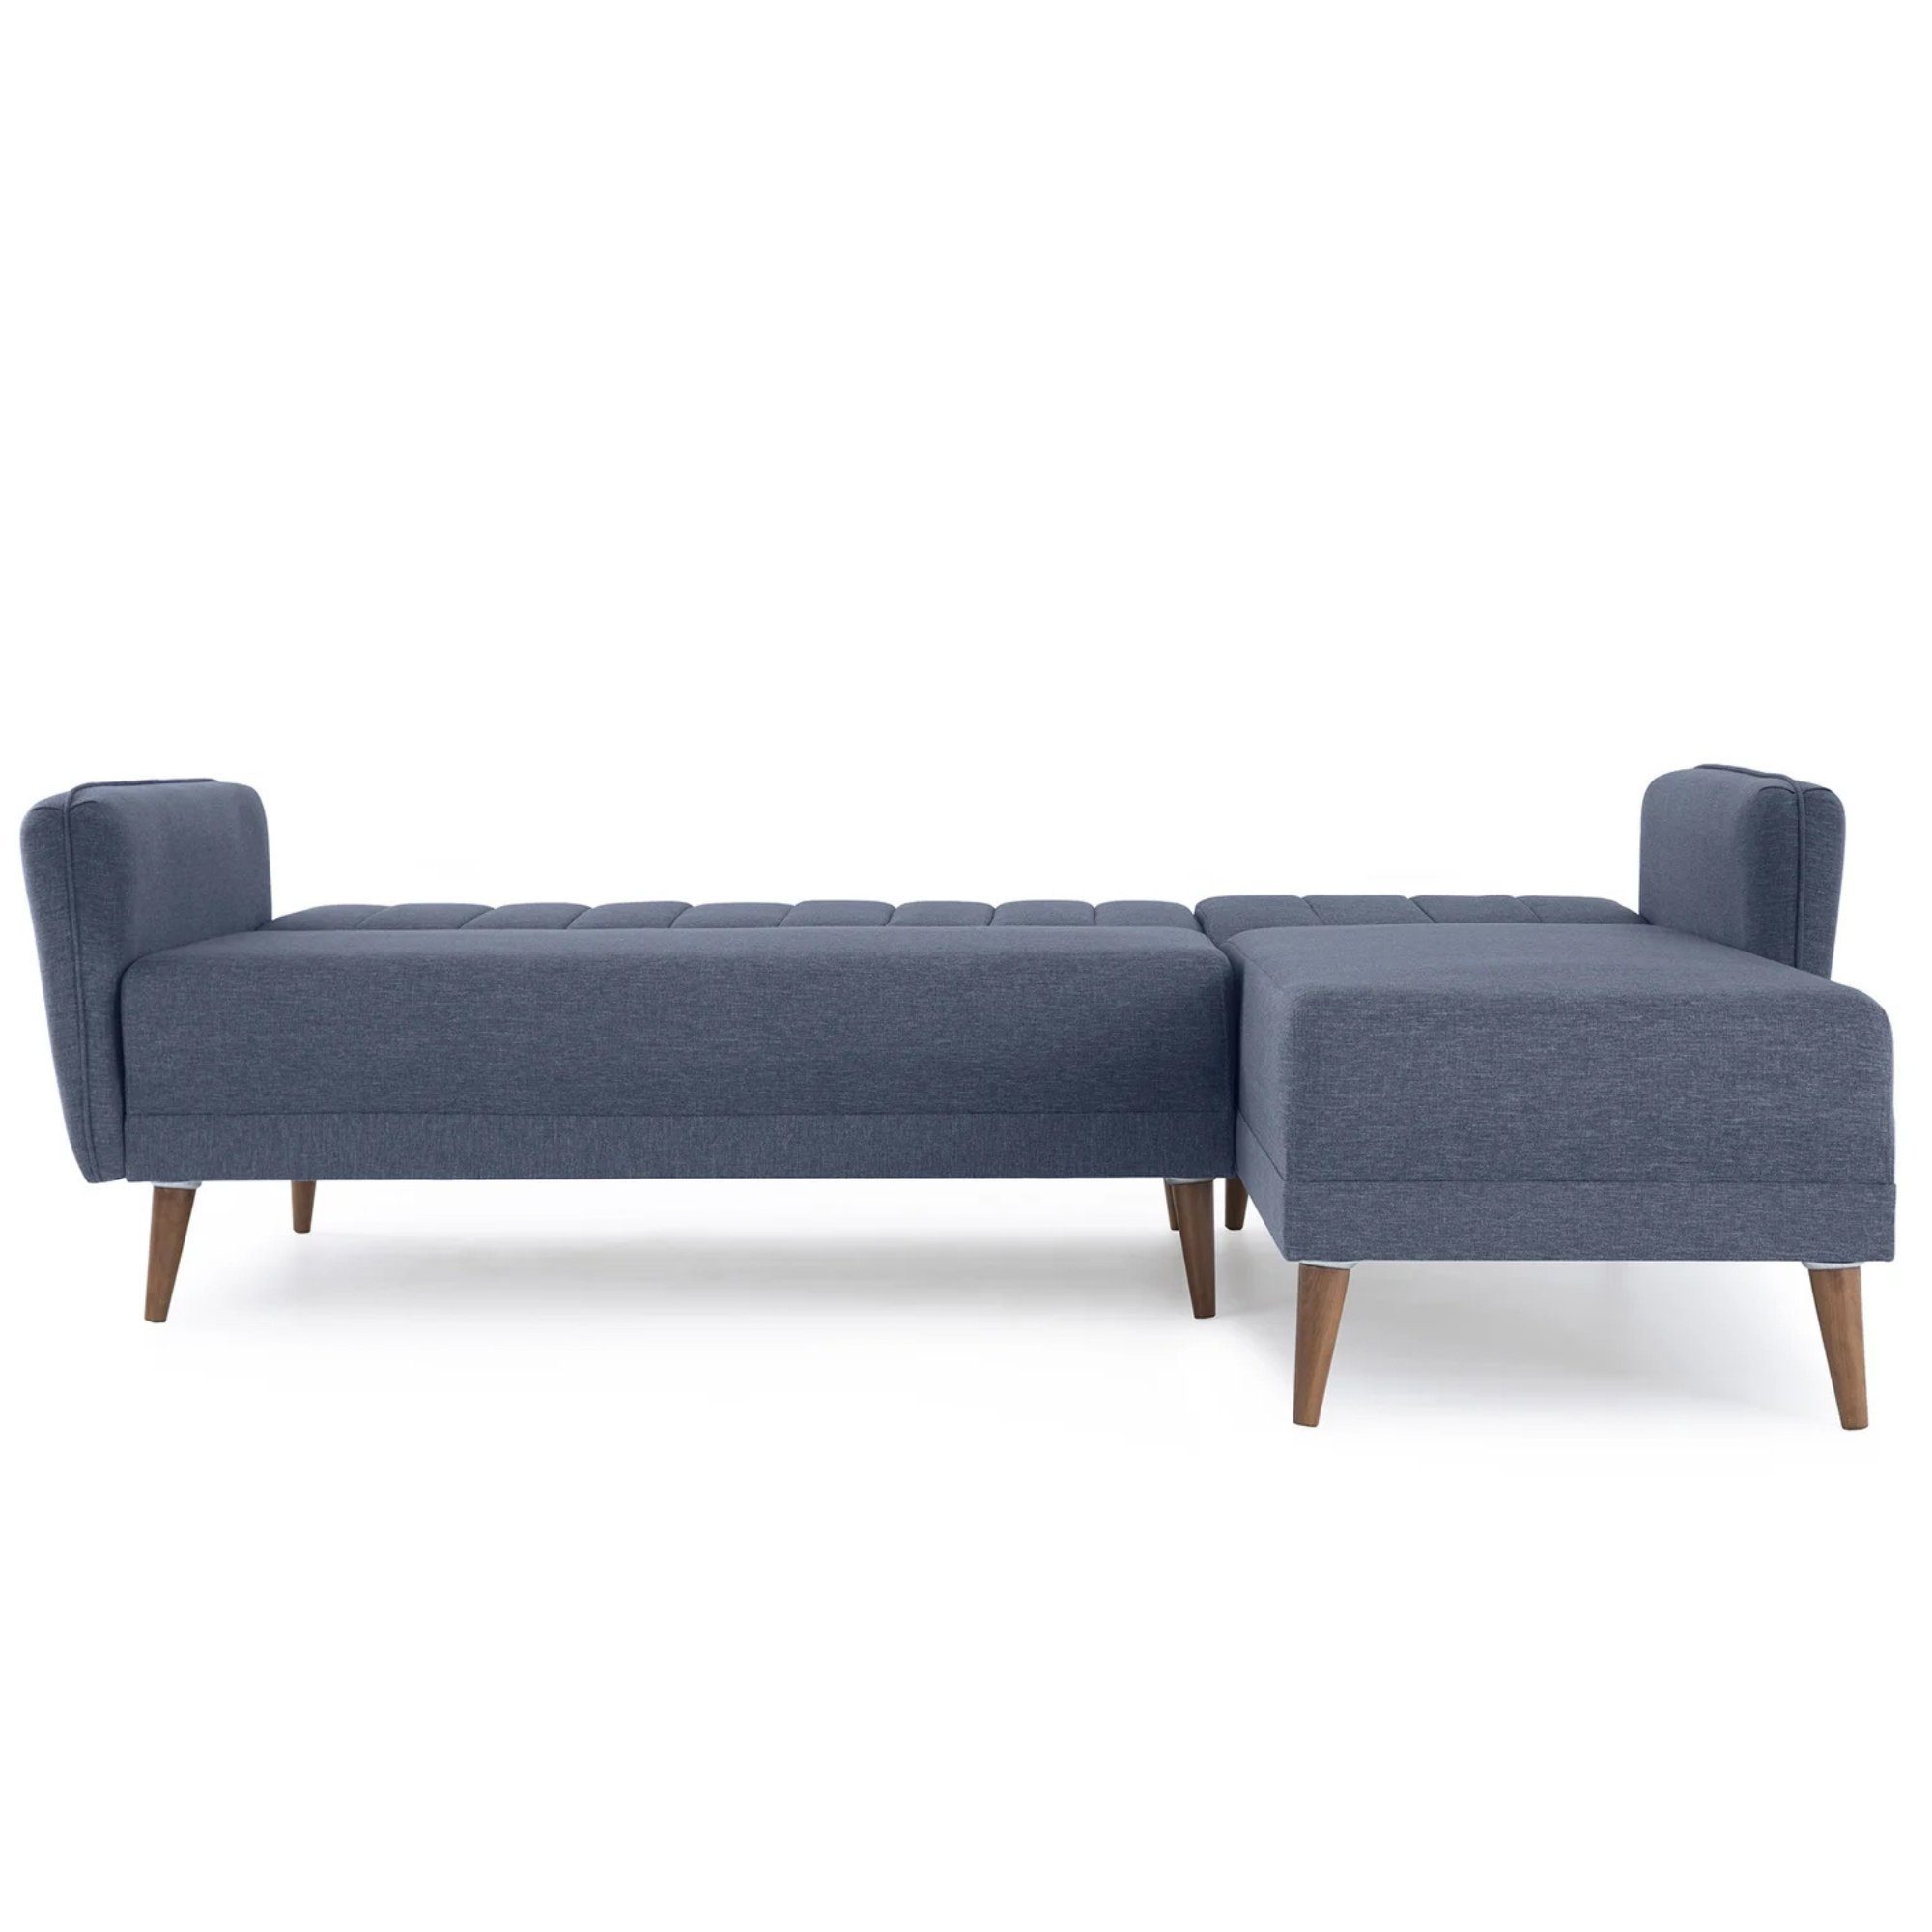 Ecksofa mit Ecksofa, Gozos Blau x 85 Gozos cm, Sitzgruppe 150 Couch, x 225 Relaxfunktion Bettfunktion Mammo Navy